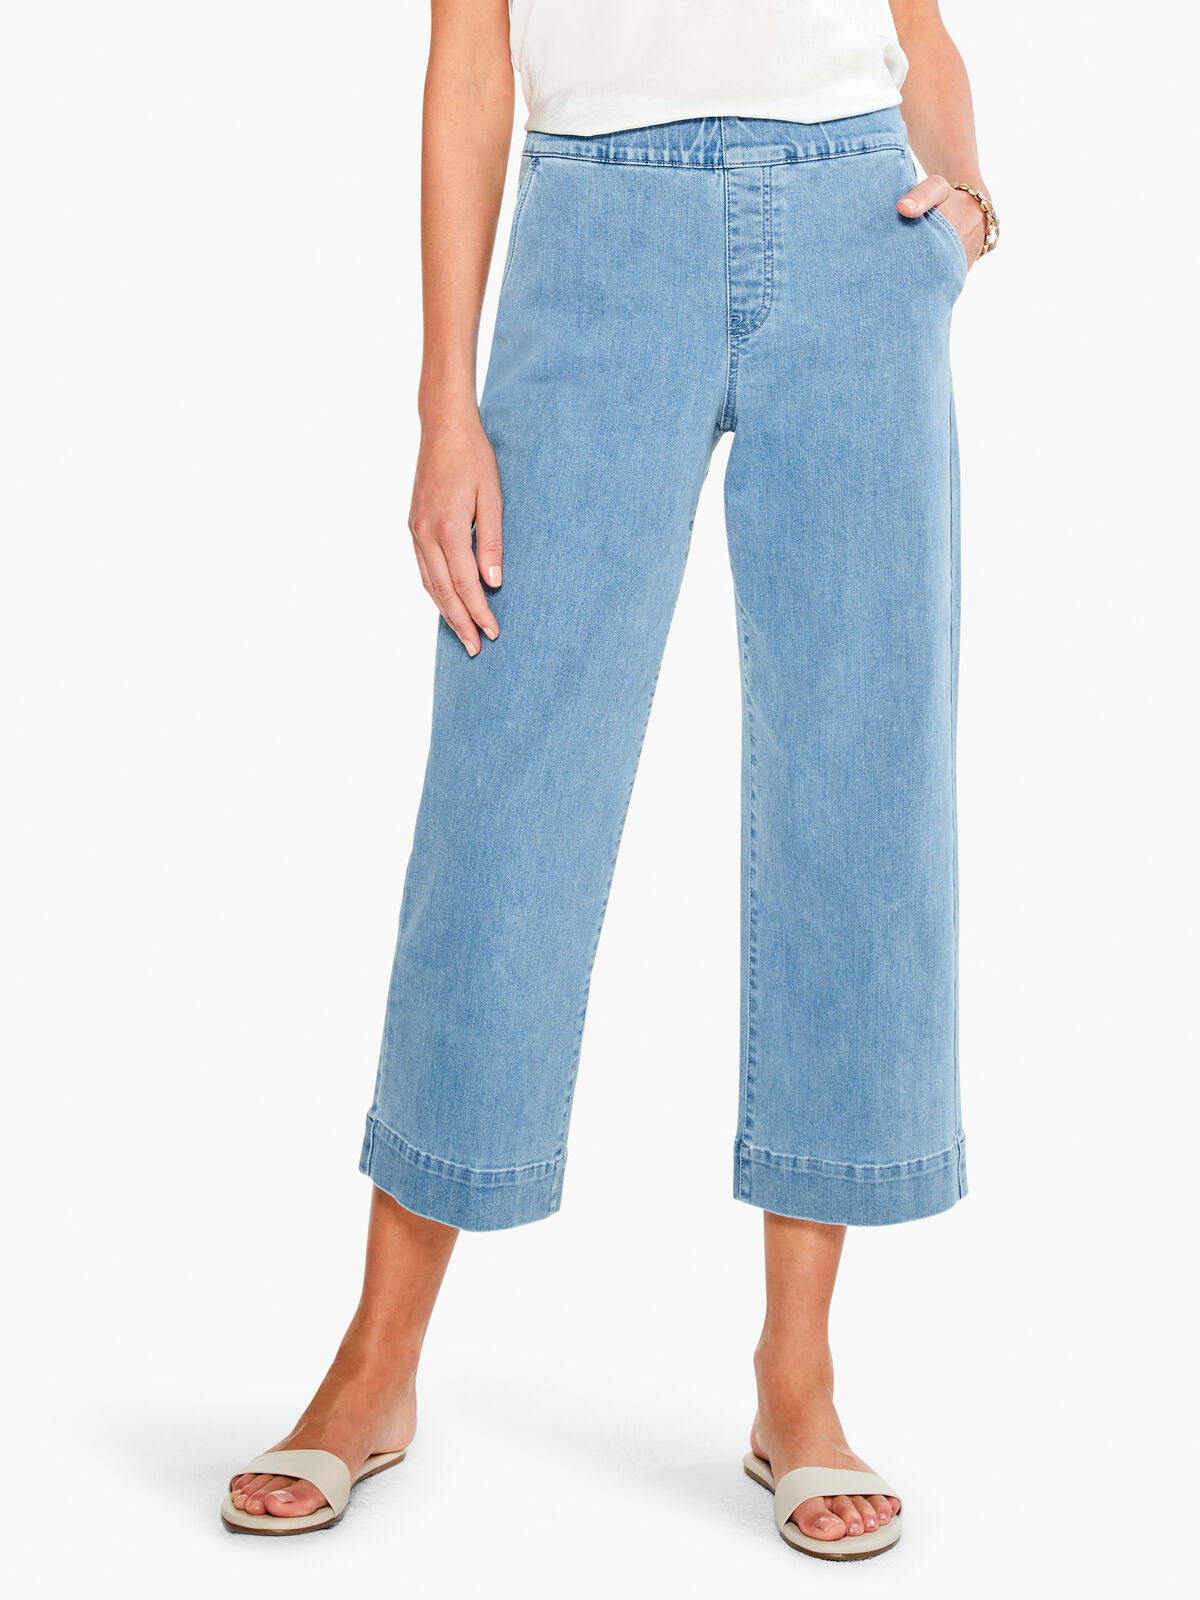 All Day Wide-Leg Pocket Jean